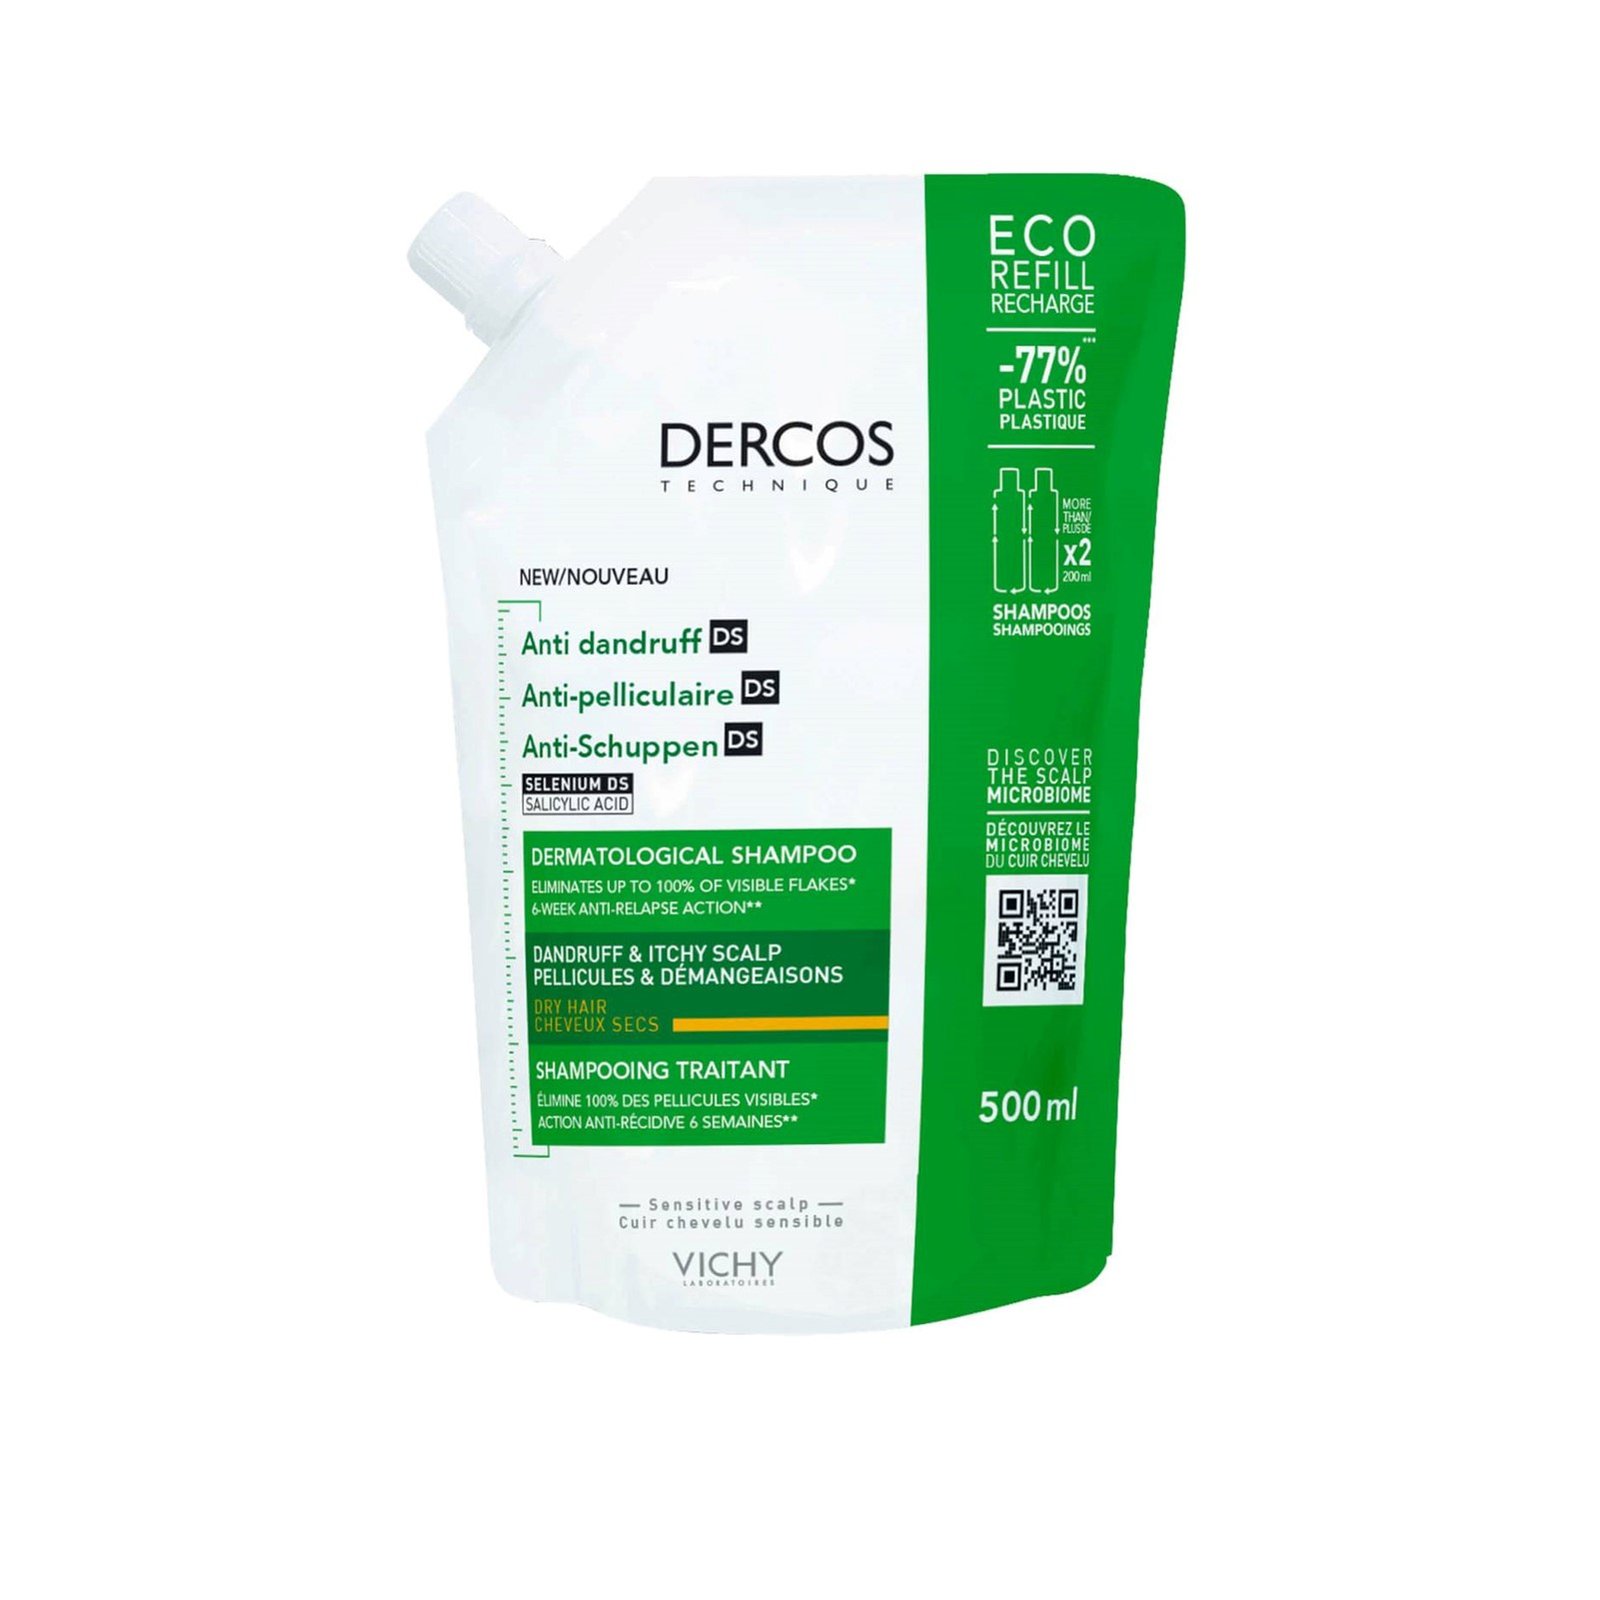 Vichy Dercos Anti-Dandruff DS Shampoo for Dry Hair Eco Refill 500ml (16.9 fl oz)